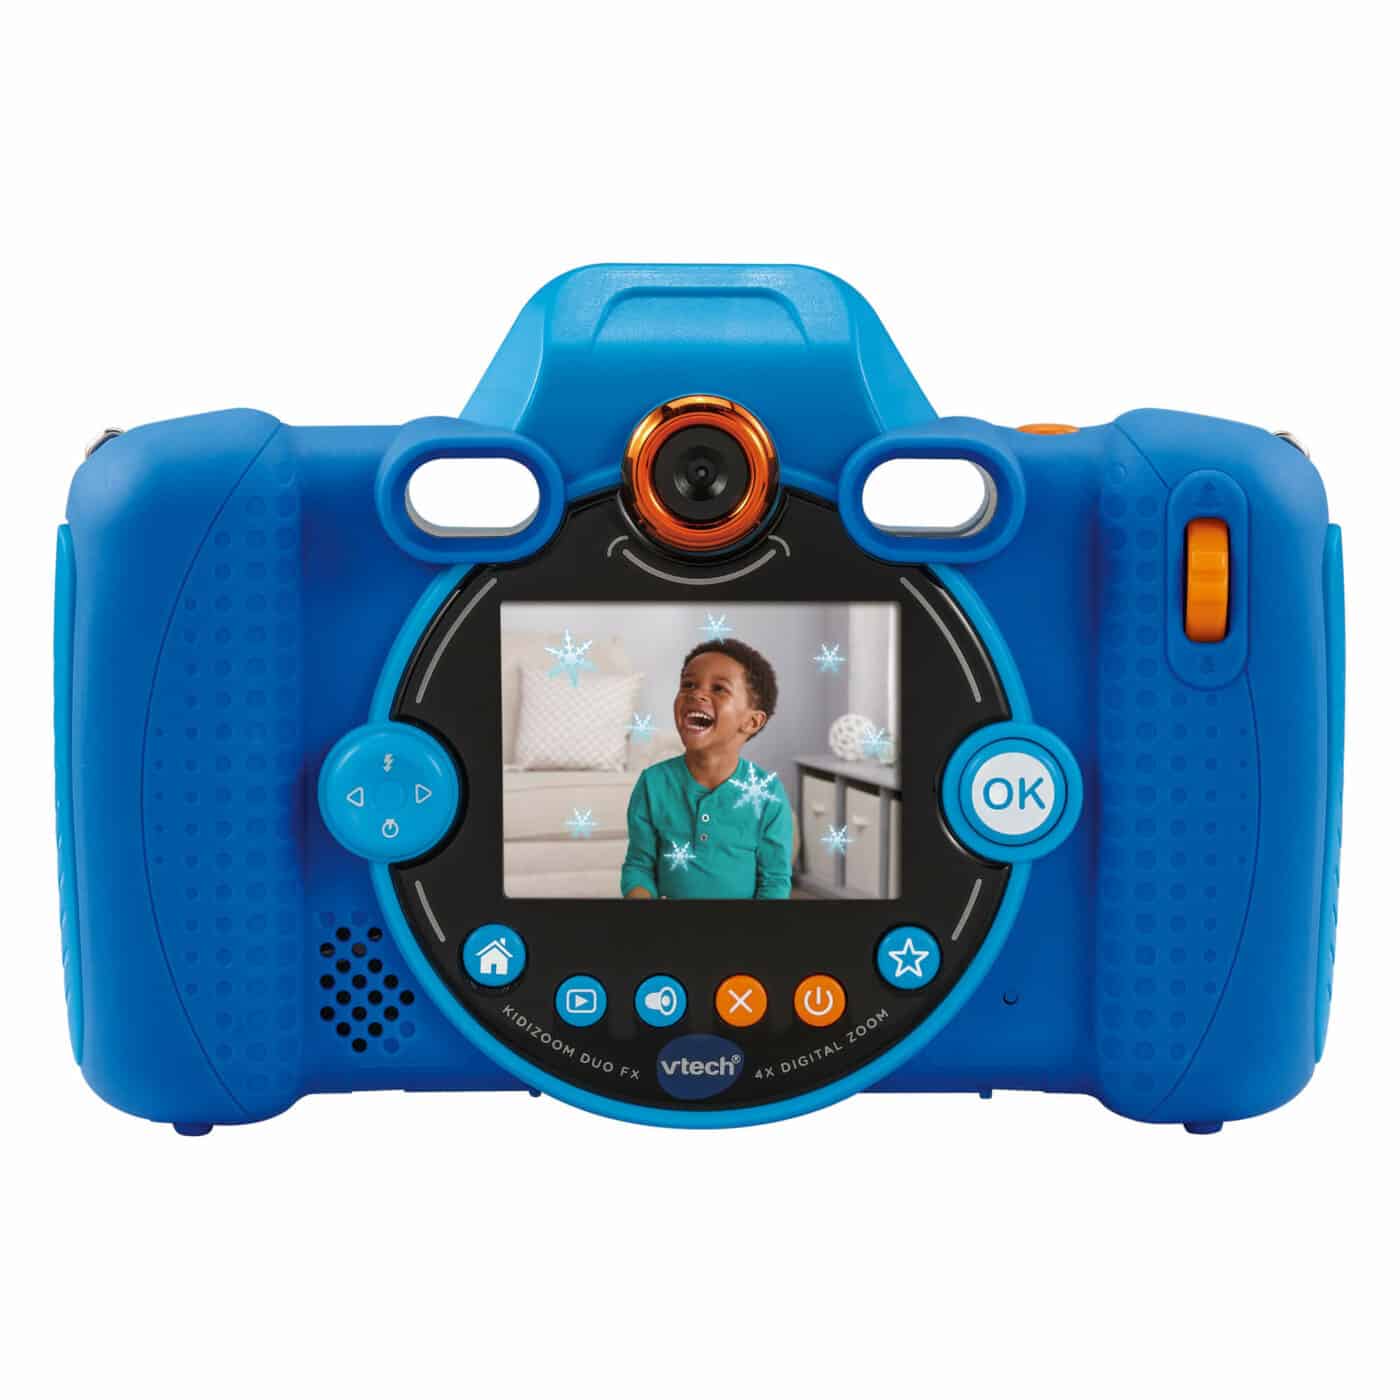 Vtech - Kidizoom DUO FX Camera - Blue2